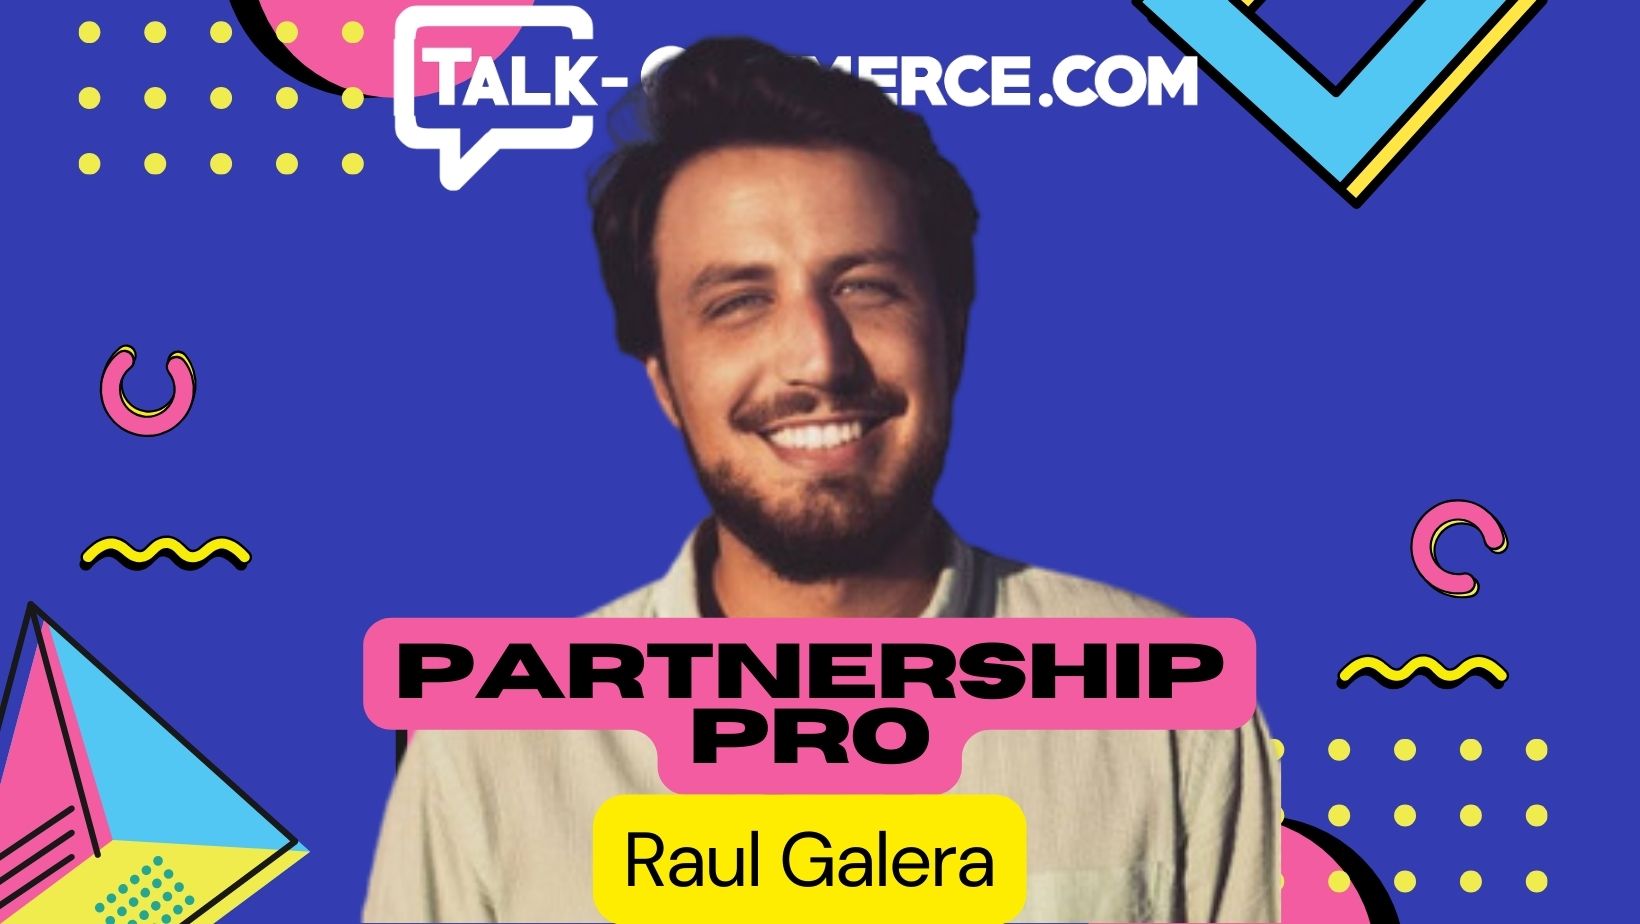 Talk Commerce - Raul Galera